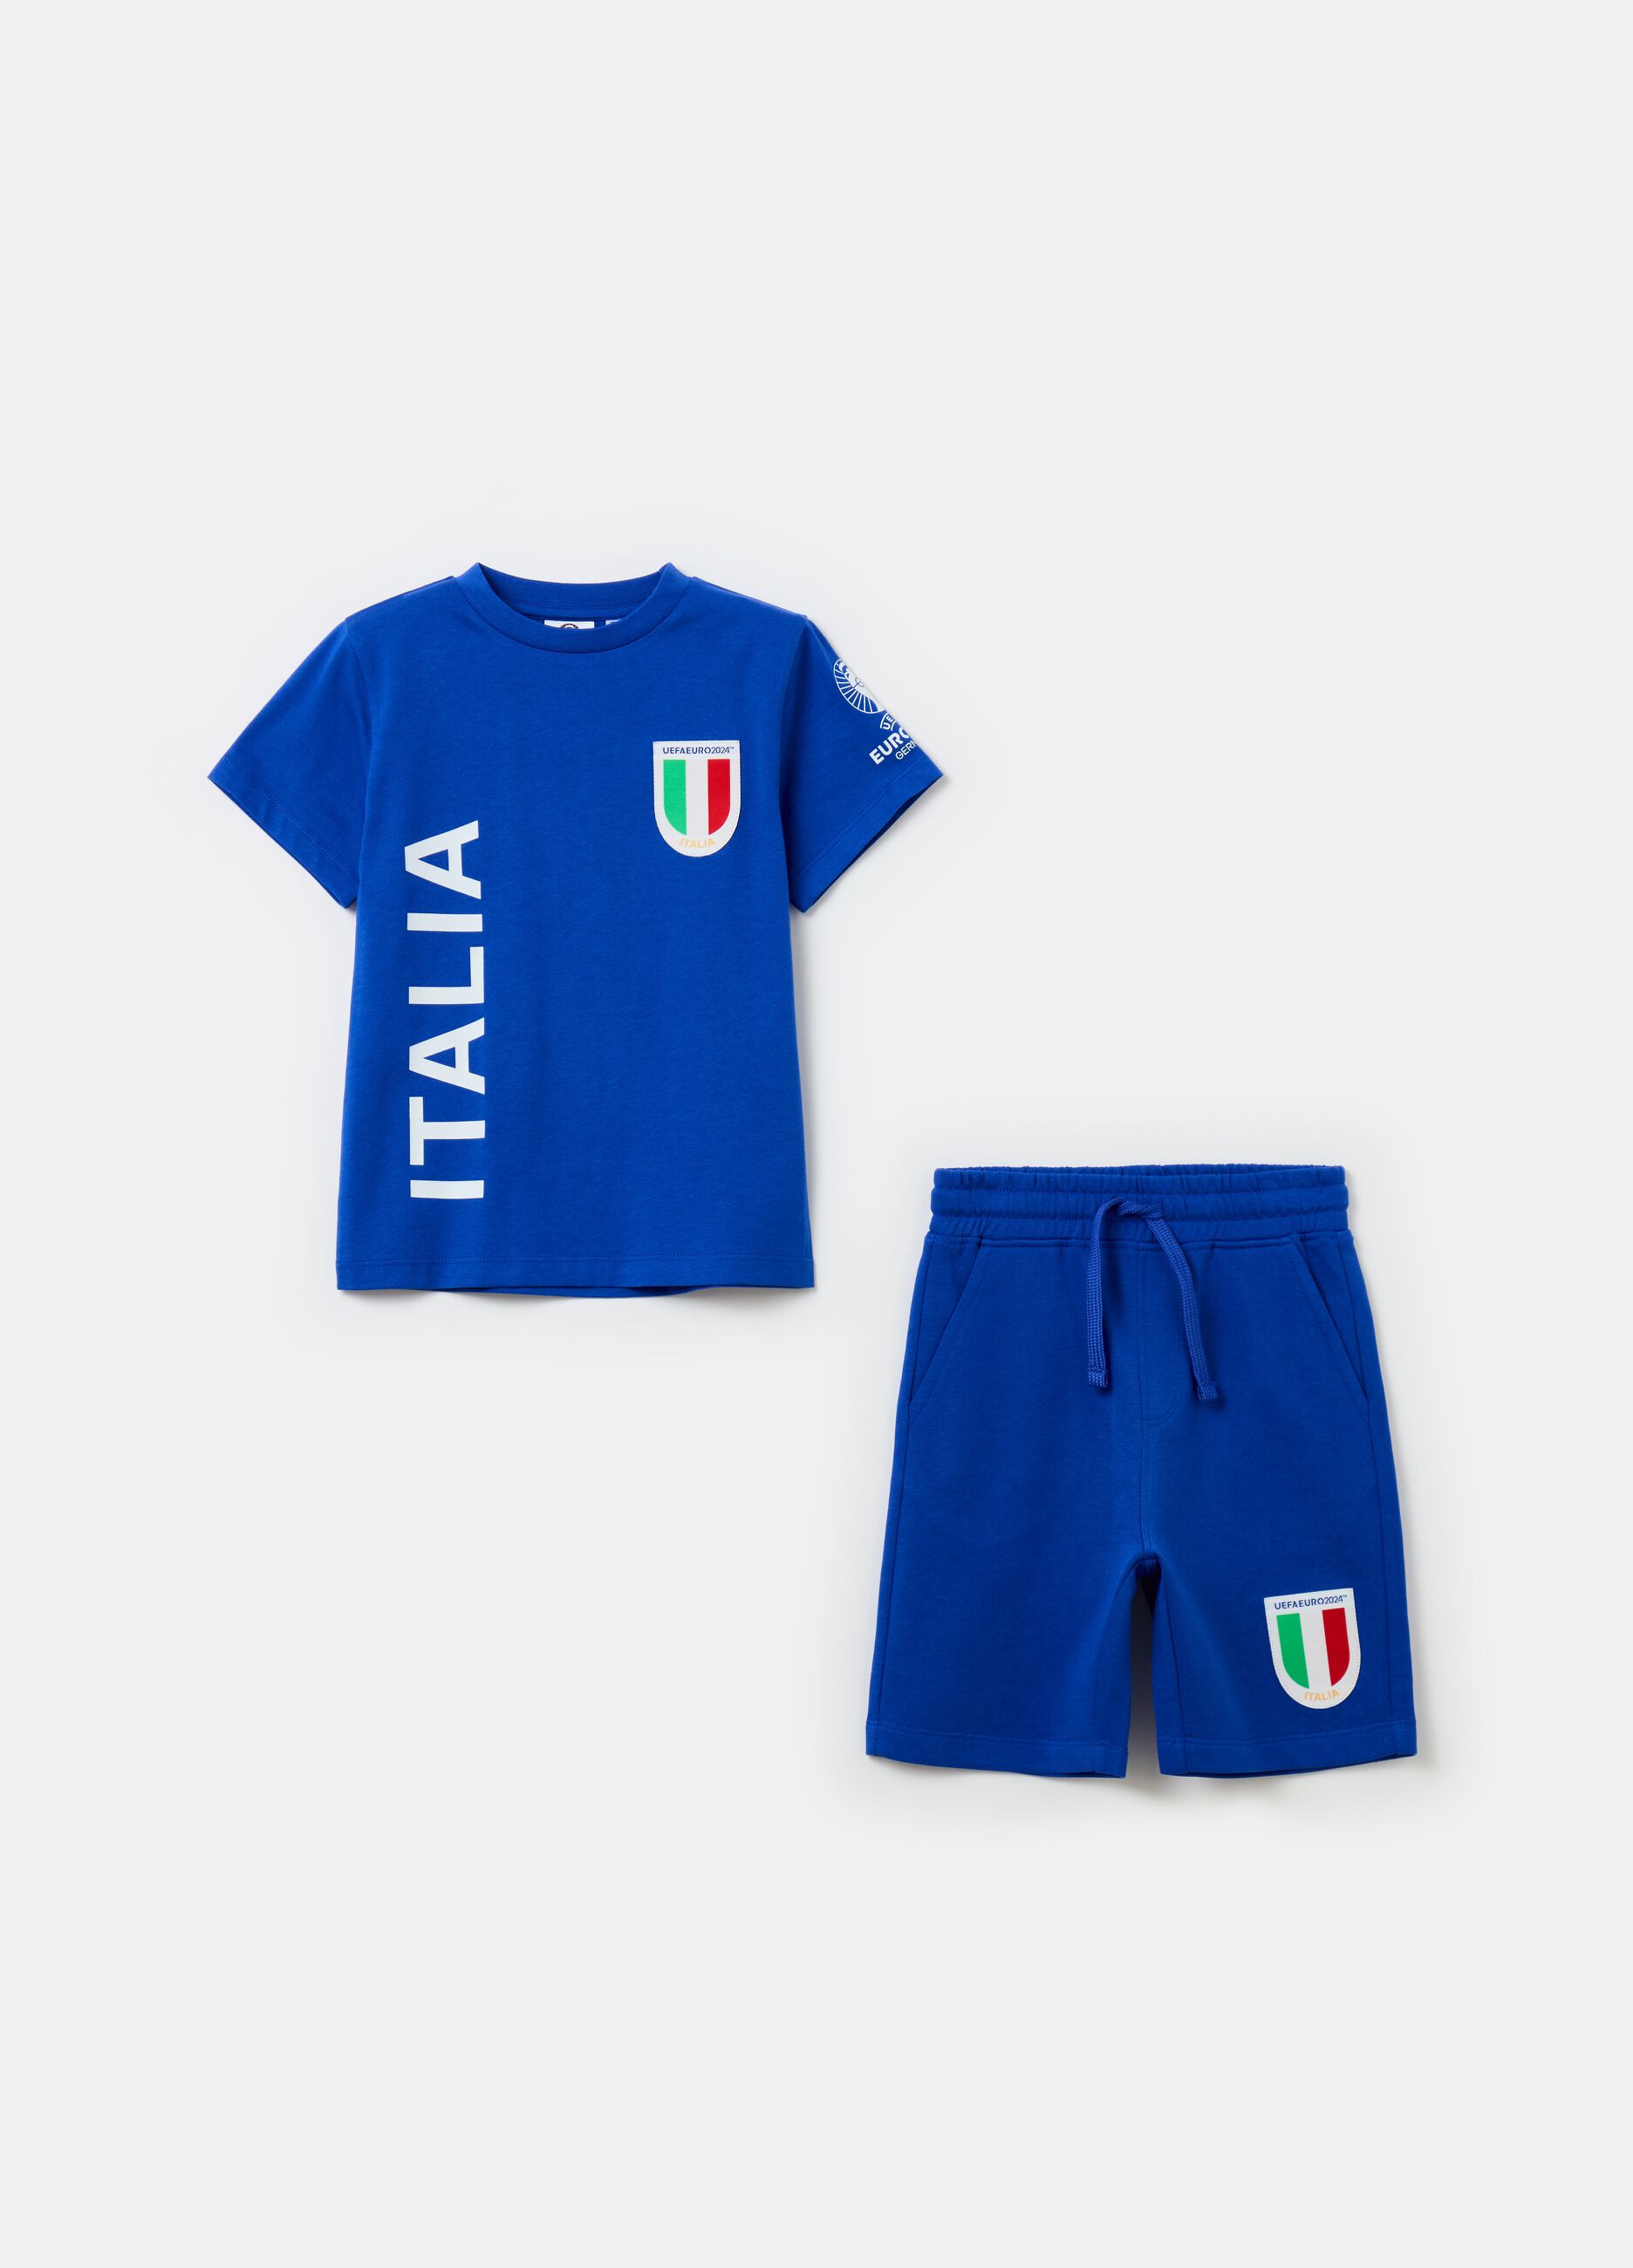 UEFA Euro 2024 Italy jogging set in cotton